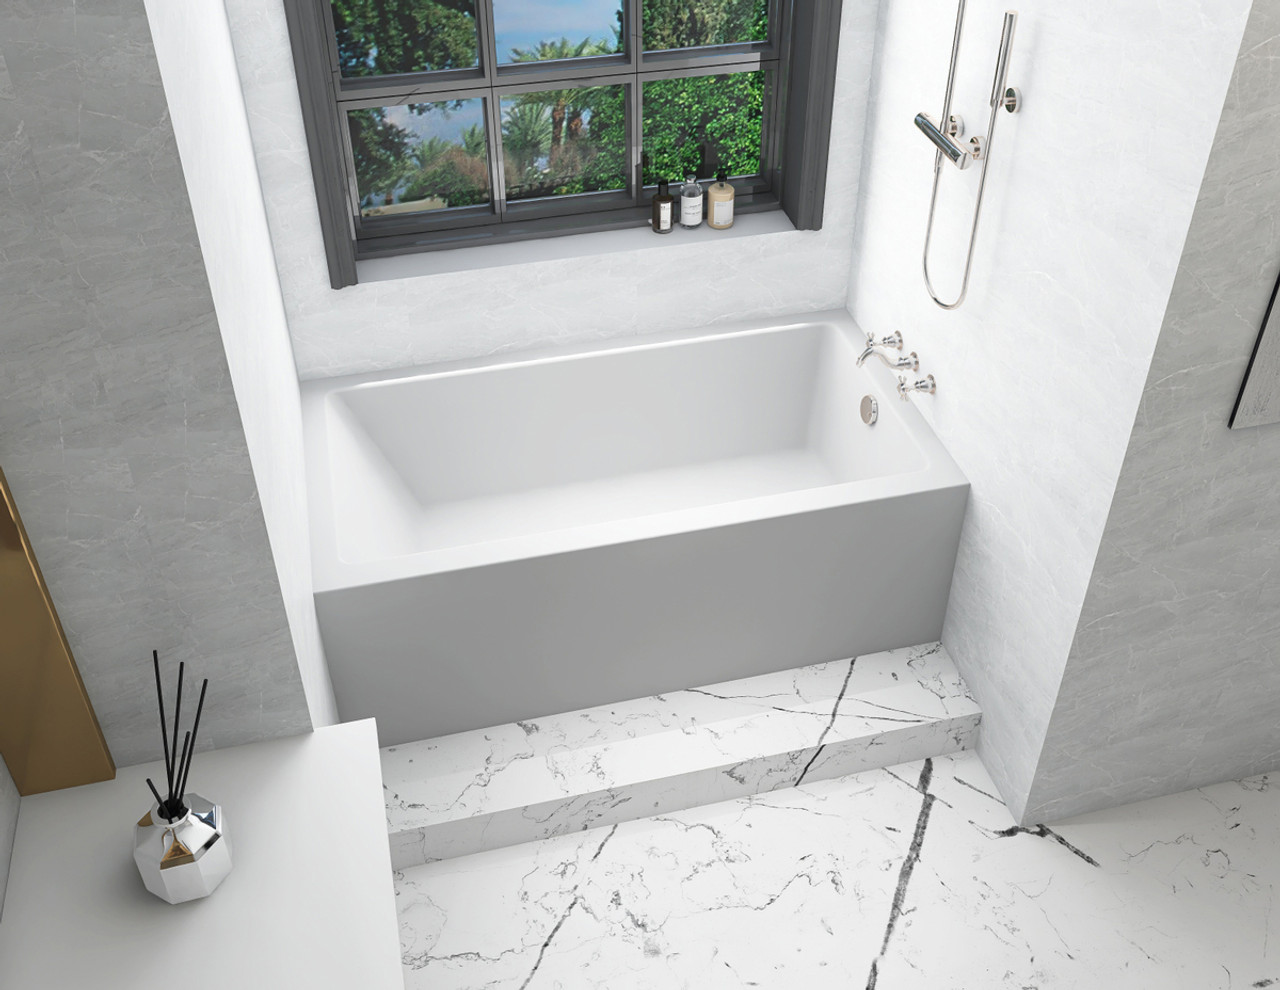 Elegant Kitchen and Bath BT202-R3260GW Alcove soaking bathtub 32x60 inch right drain in glossy white